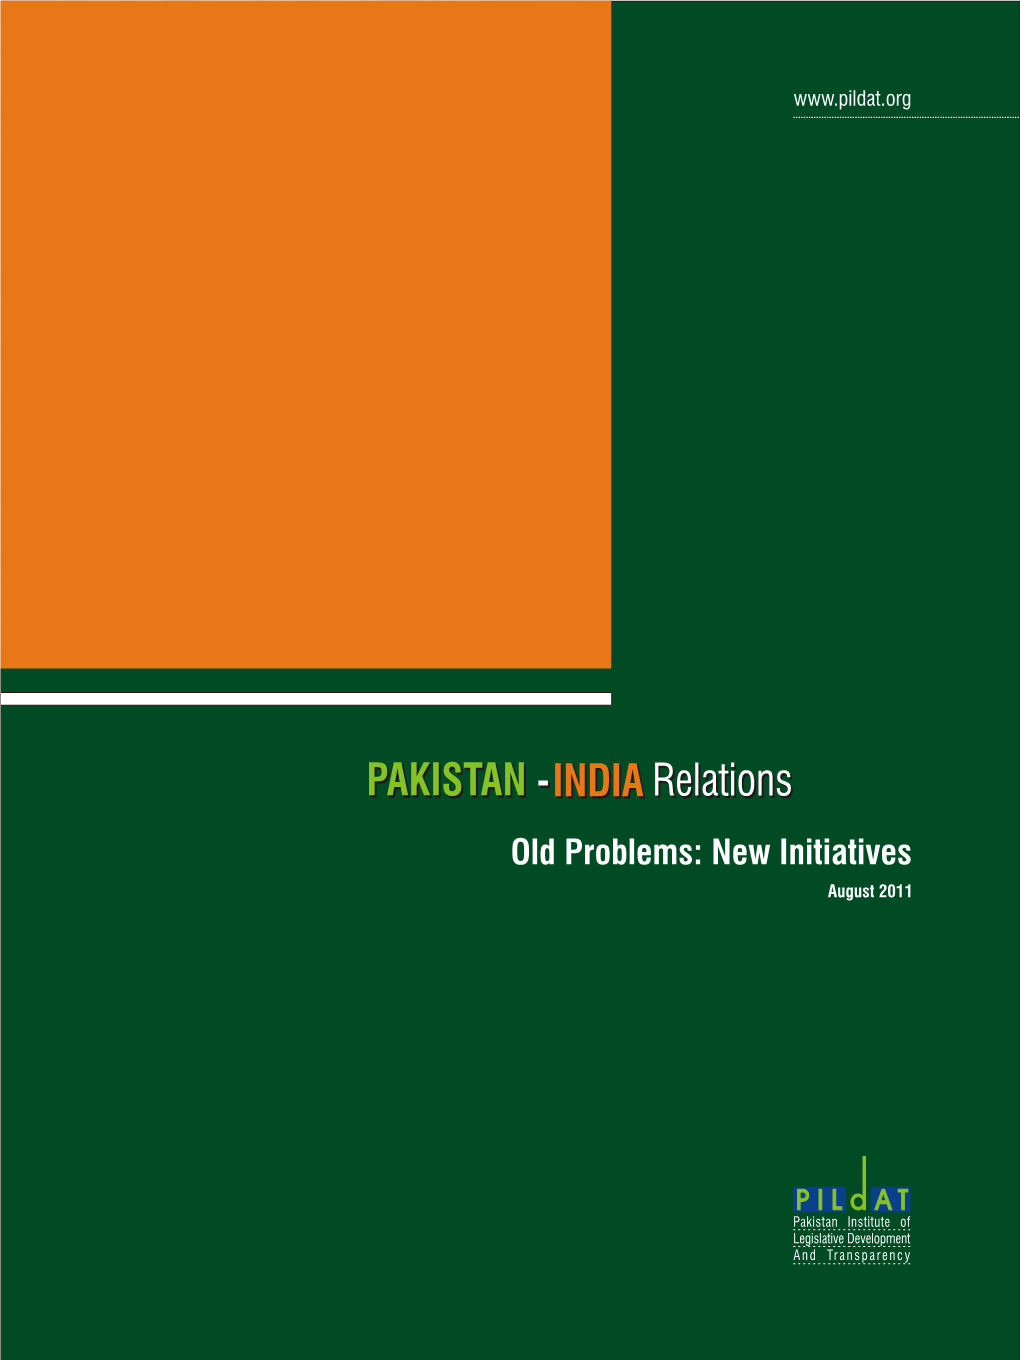 Pakistan-India Relations